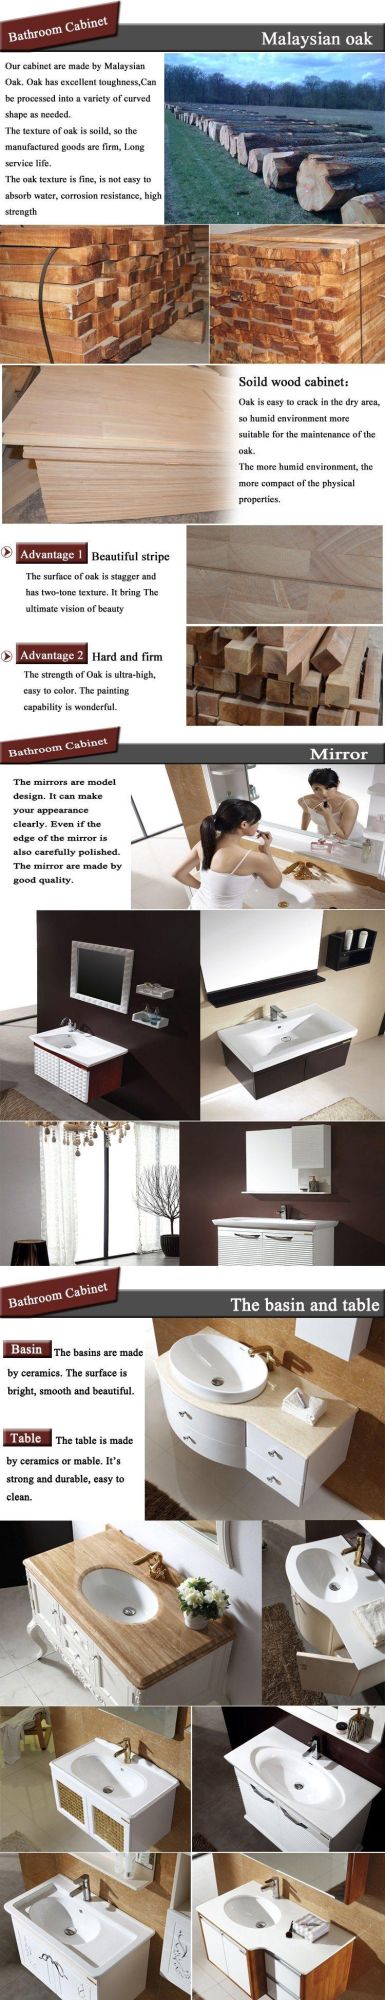 Romantic Italian Used Vanity Fair Hot and New Bathroom Cabinet